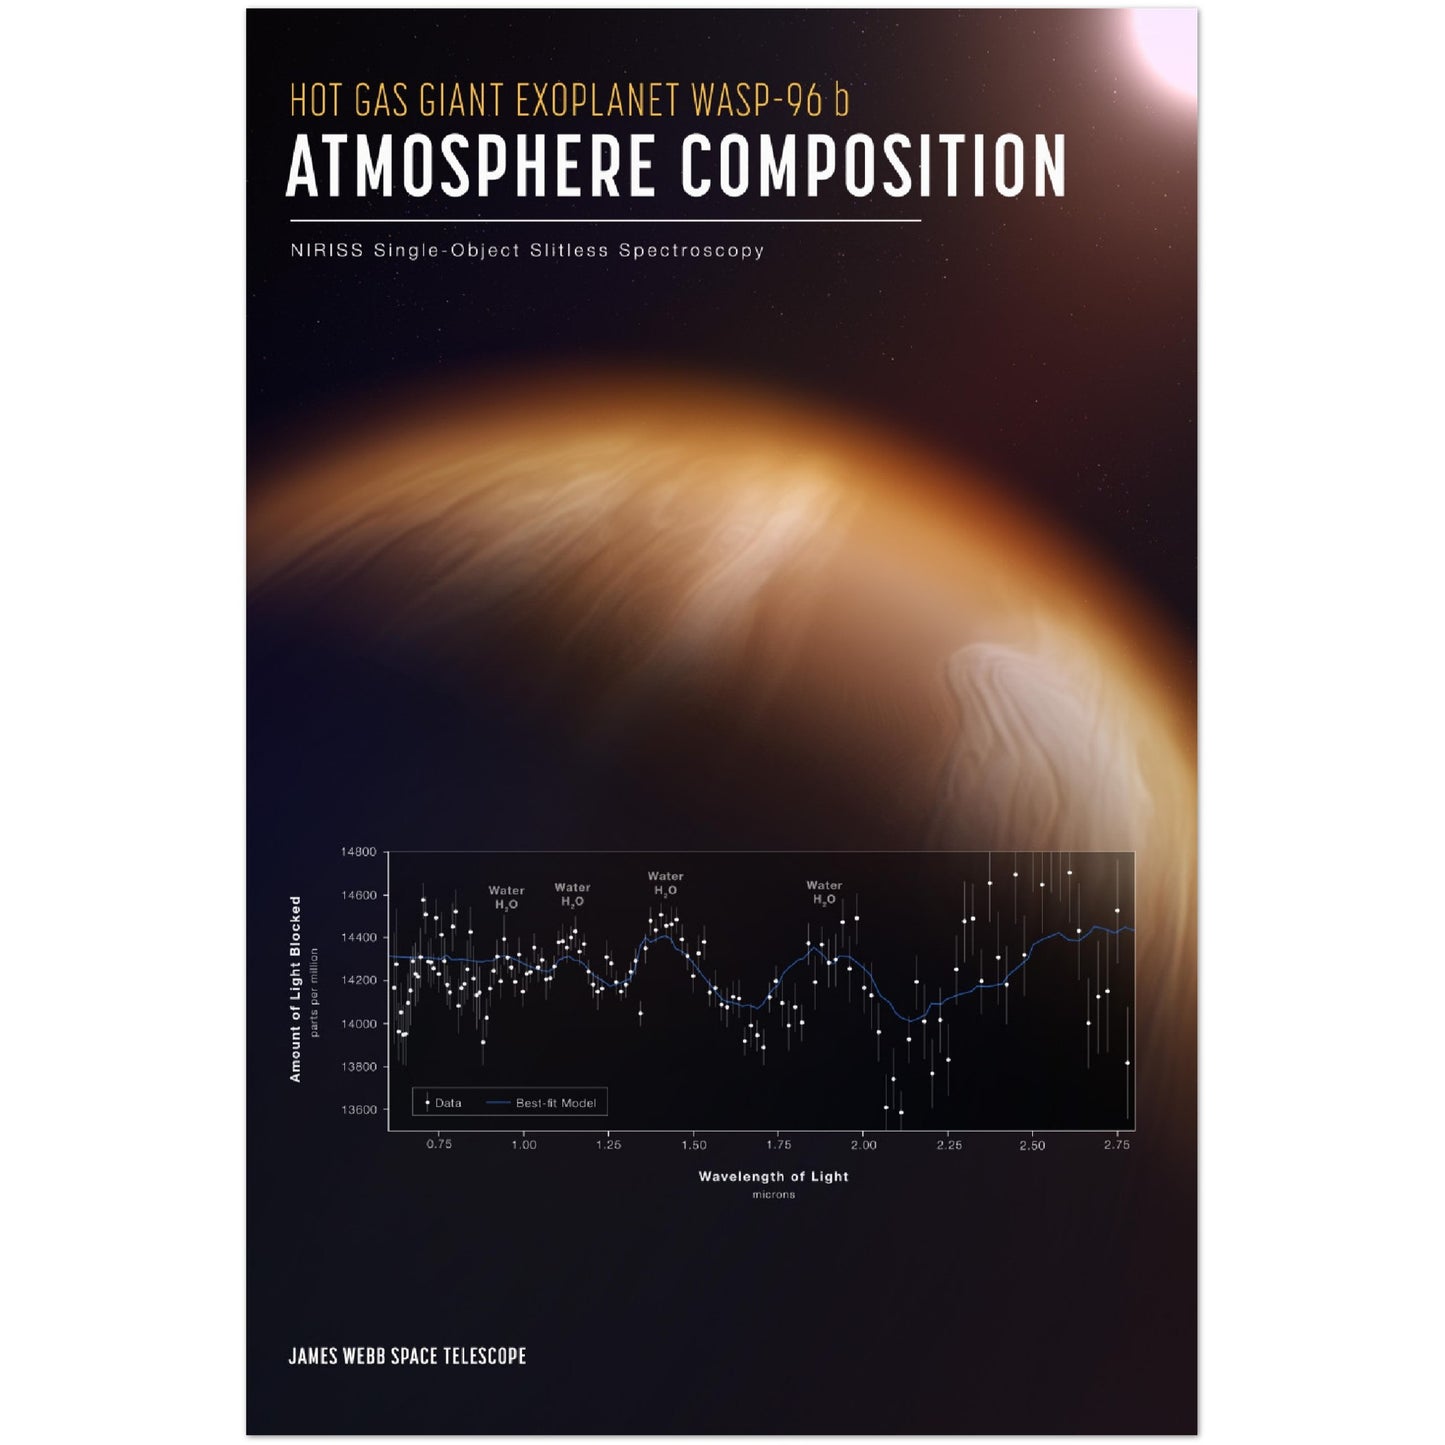 NASA Poster - Exoplanet WASP-96 b poster from NASA's James Webb Space Telescope